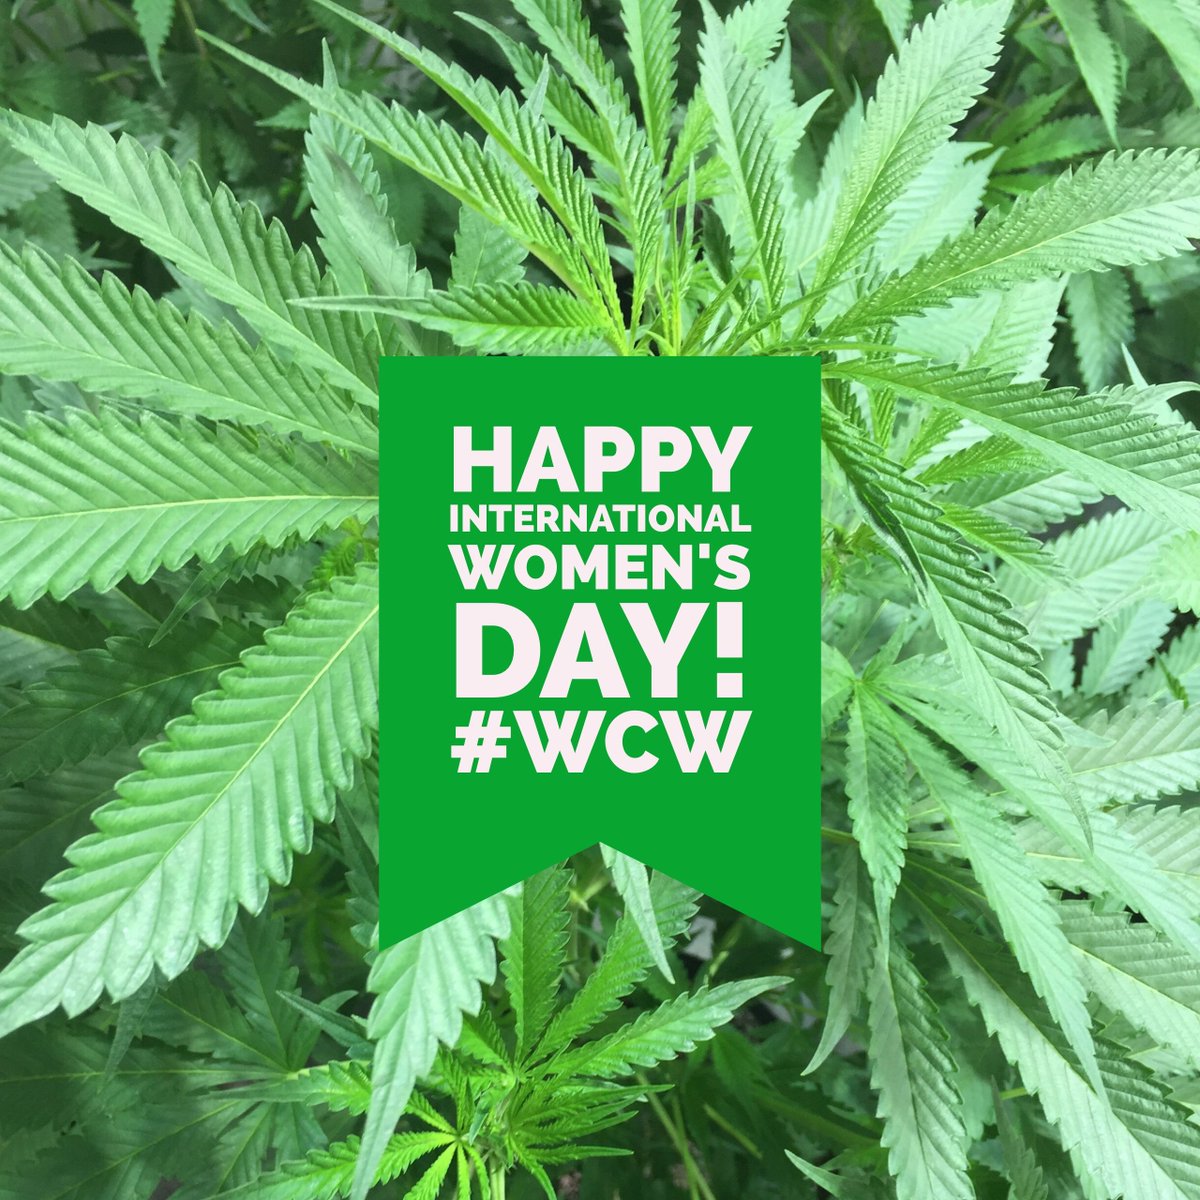 Happy #InternationalWomensDay to all the amazing women around the world! #WomenGrow #WomeninWeed #WomenWhoGrow #WCW #WomanCrushWednesday